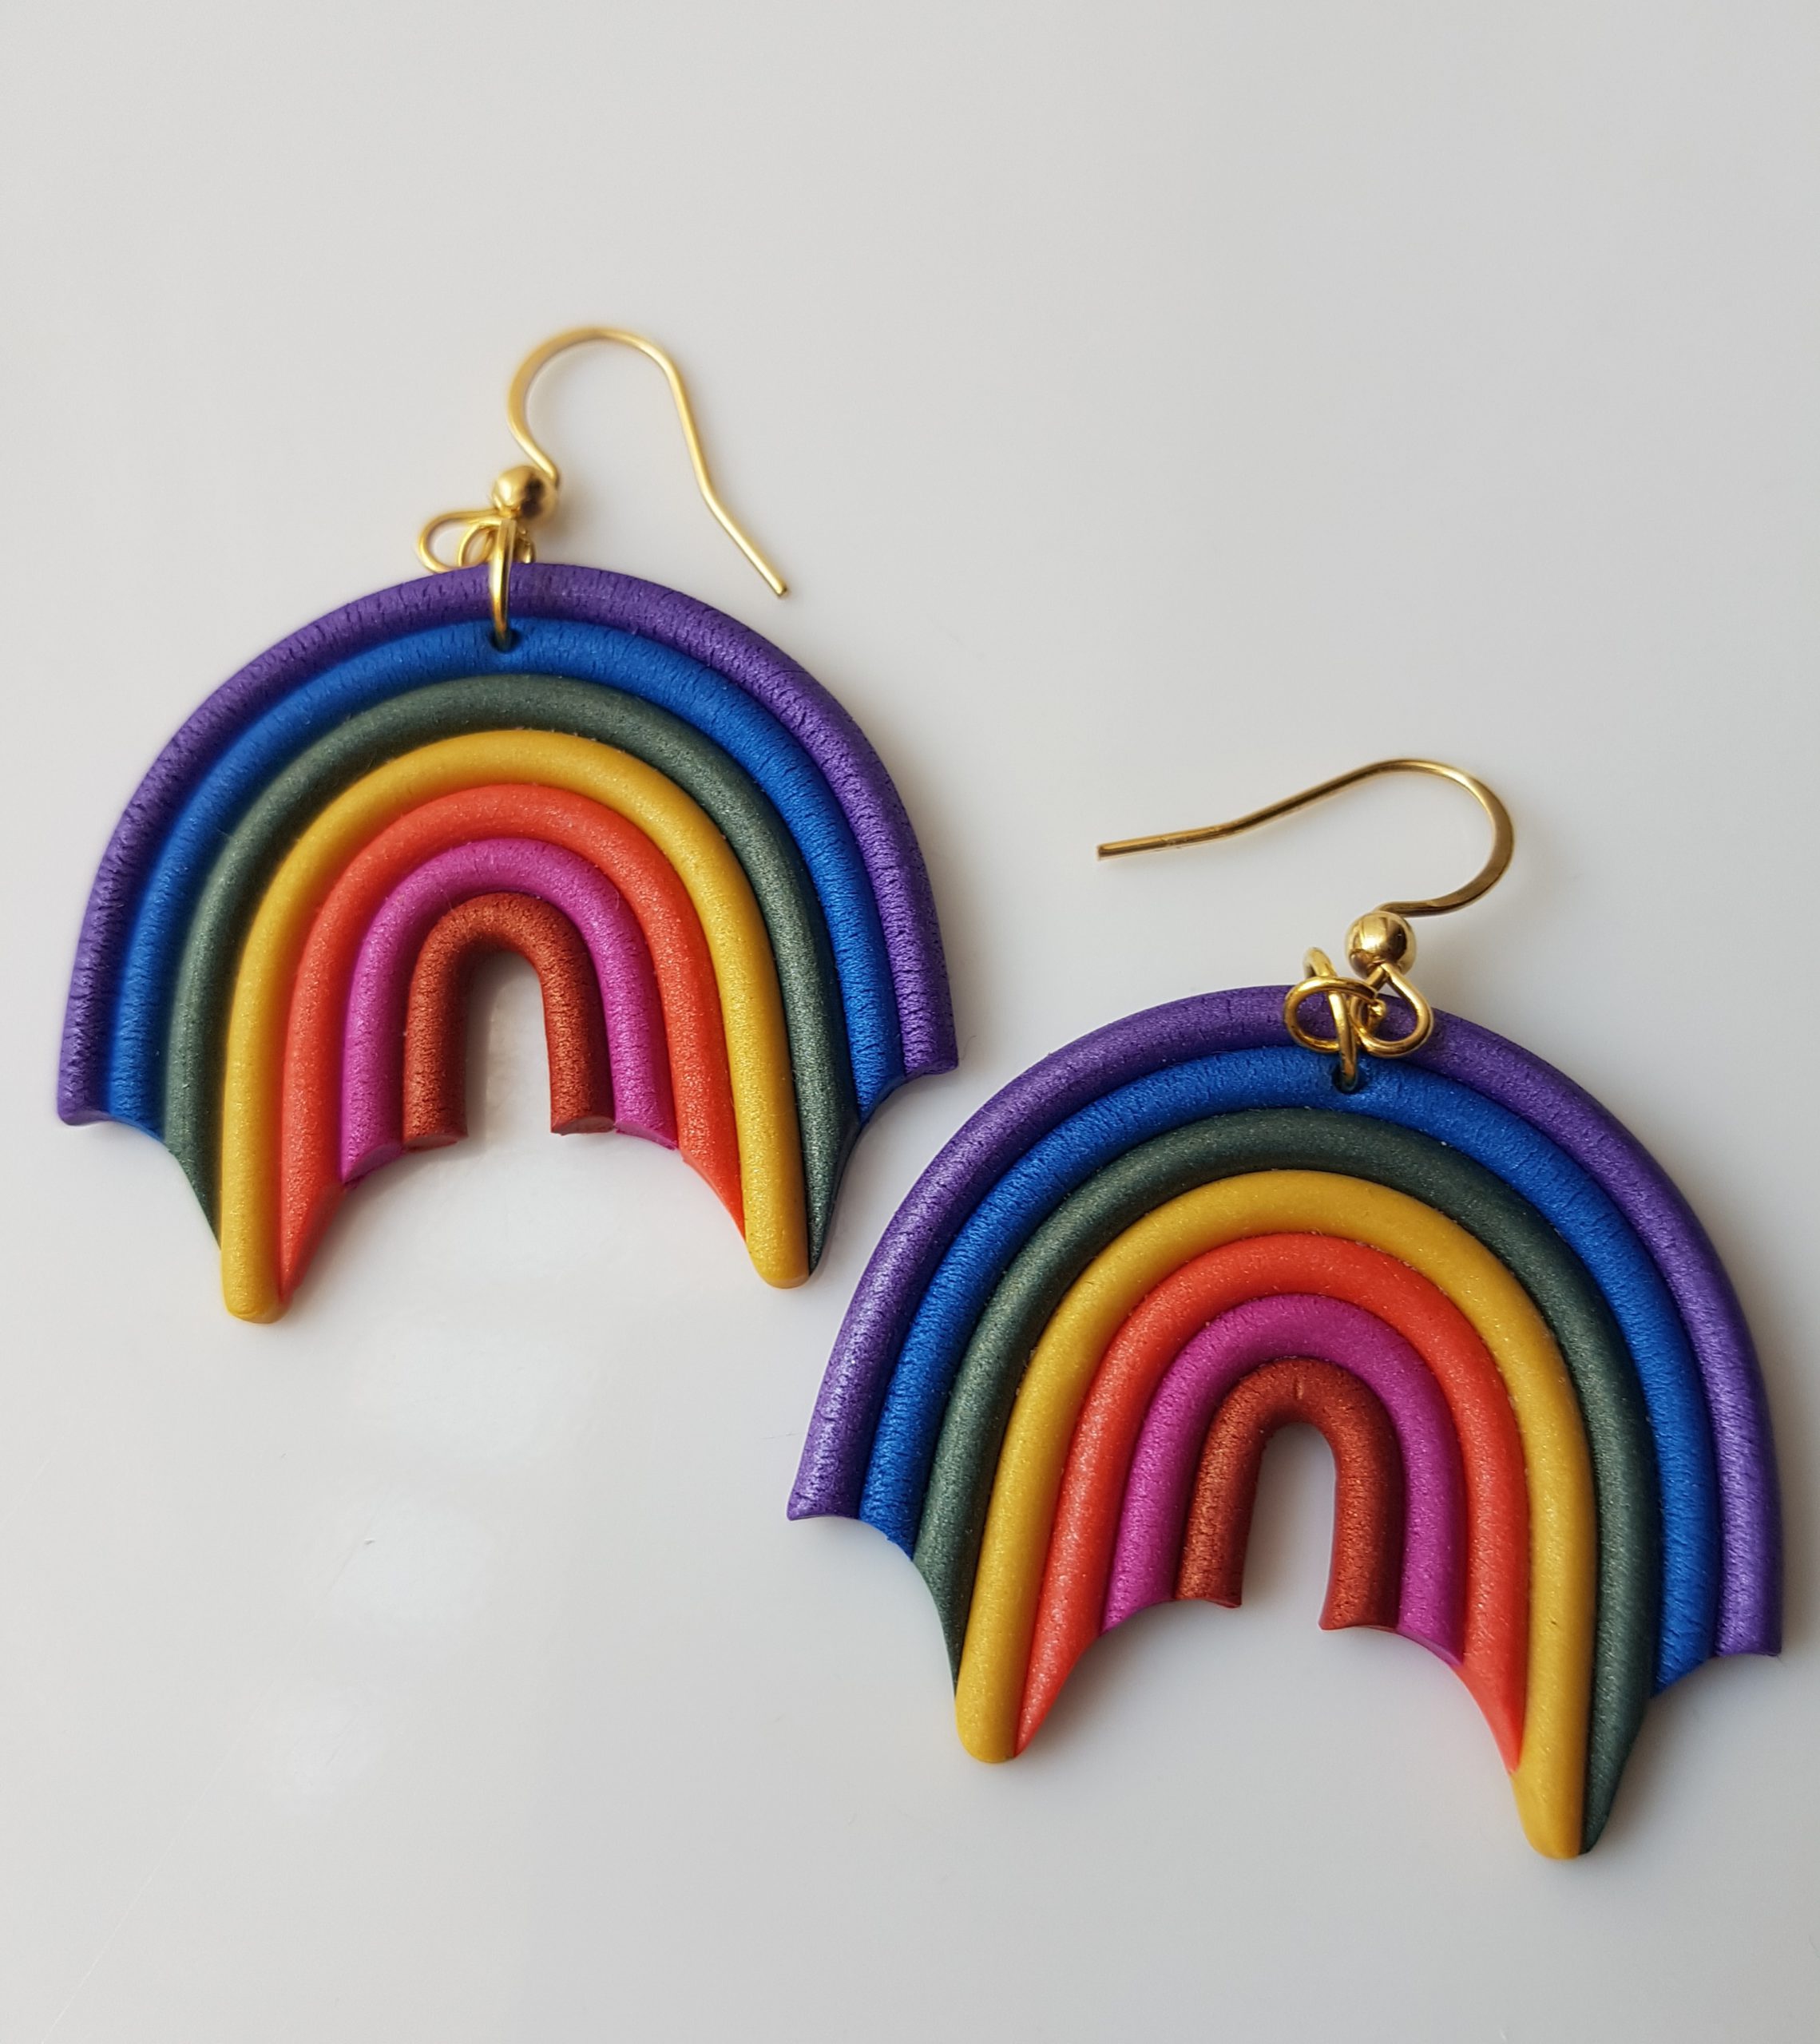 Rainbow Earrings in Metallic Shades | Polymer Clay Earrings - Style 1